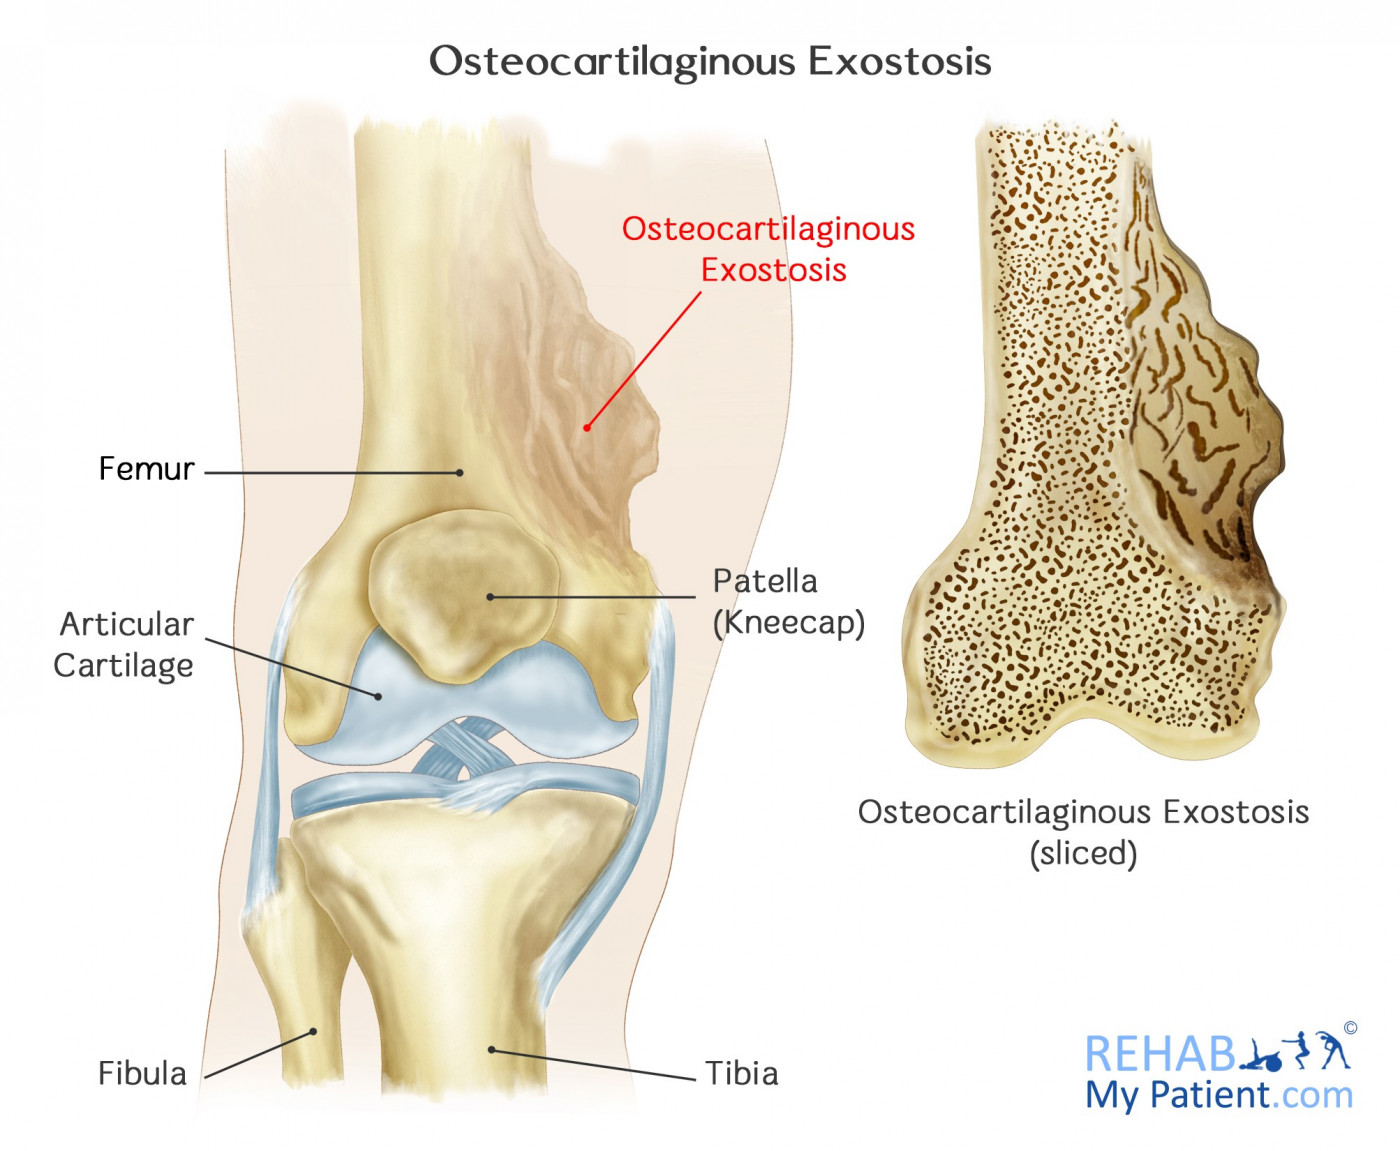 Osteocartilaginous Exostosis